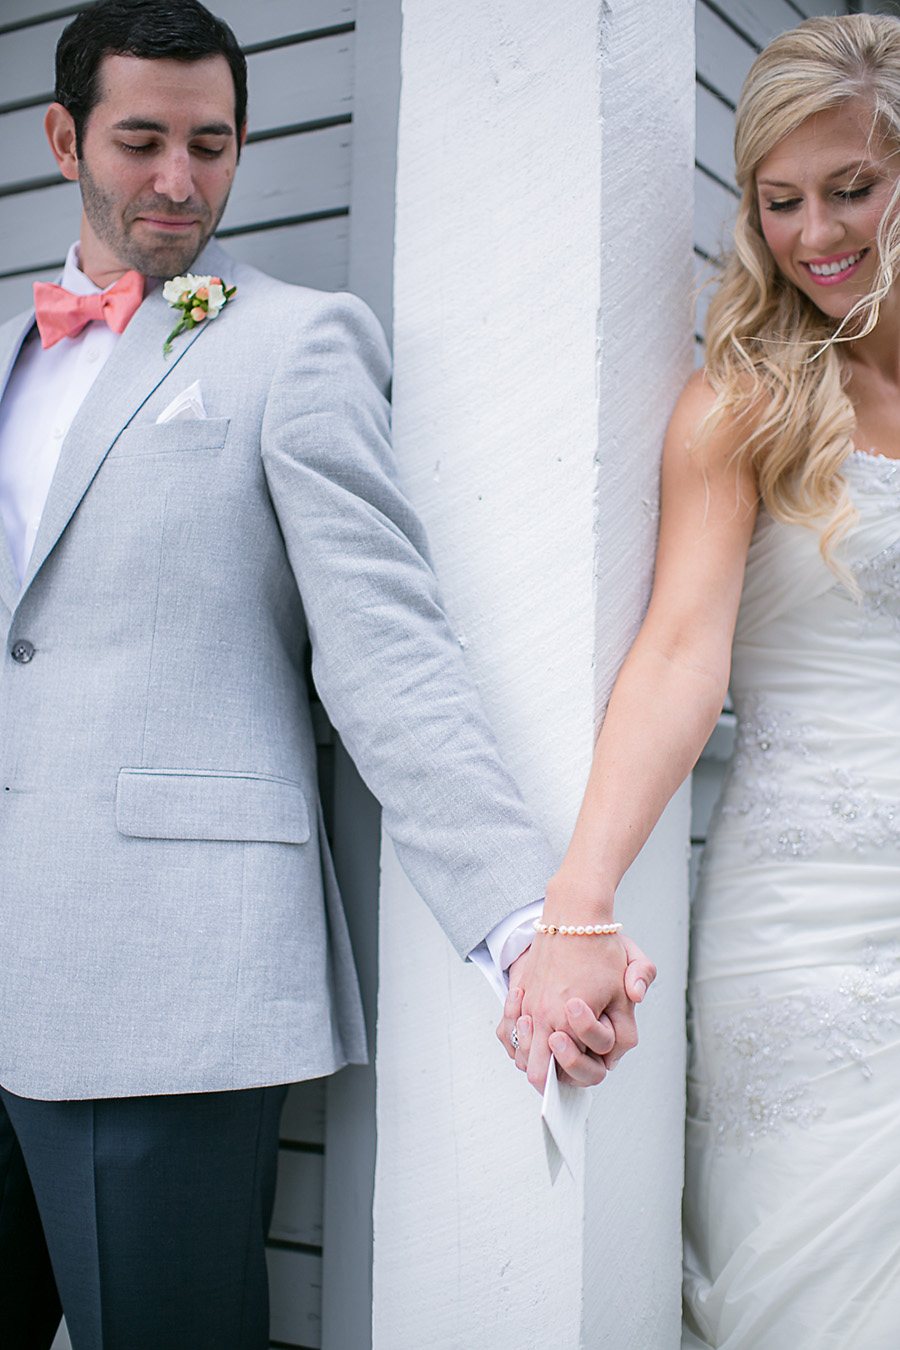 The Bride and Groom - Modern First Look Idea - Holding Hands - Bald Head Island Wedding - Photo by Eric Boneske